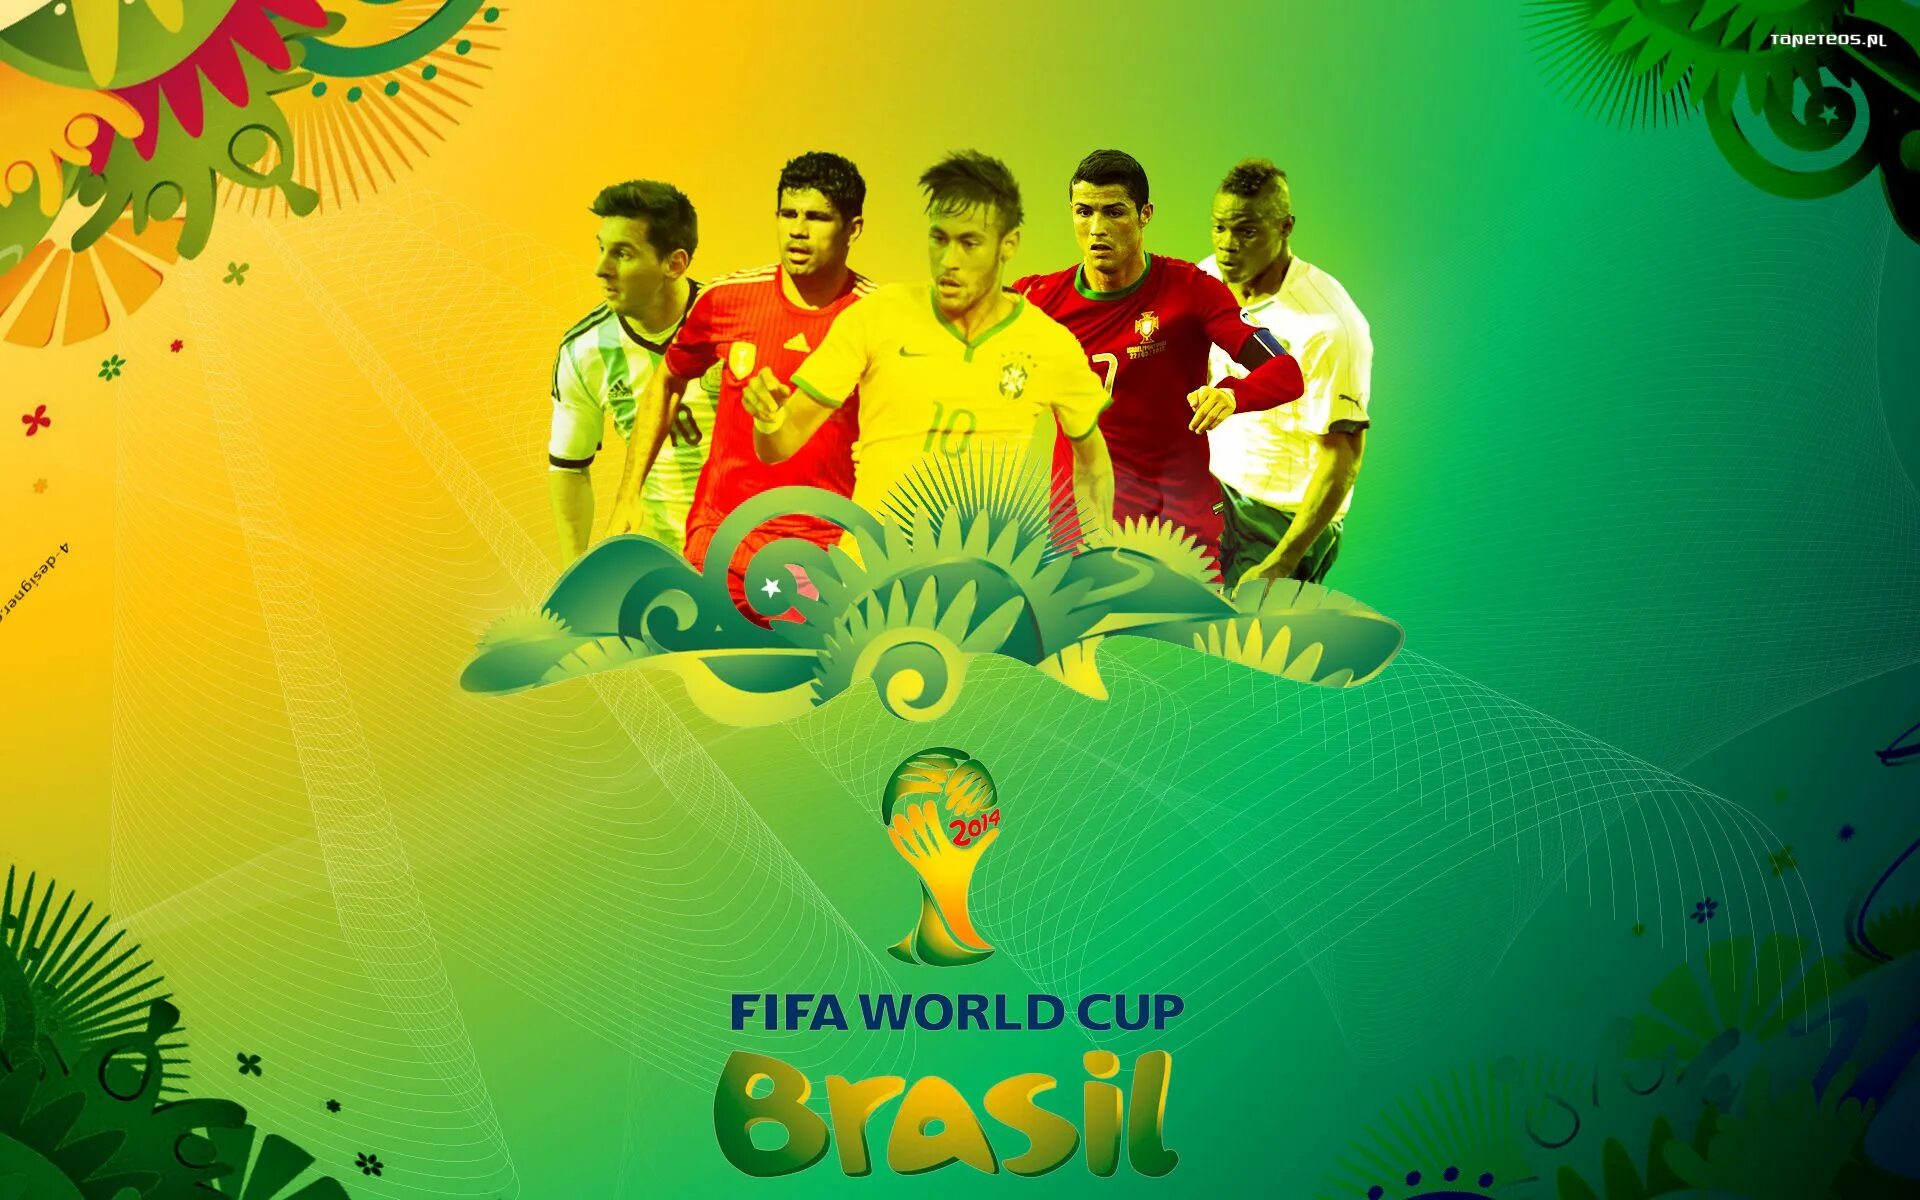 ФИФА ворлд кап 2014. 2014 FIFA World Cup Brazil. FIFA Brazil 2014. ЧМ 2014 лого.